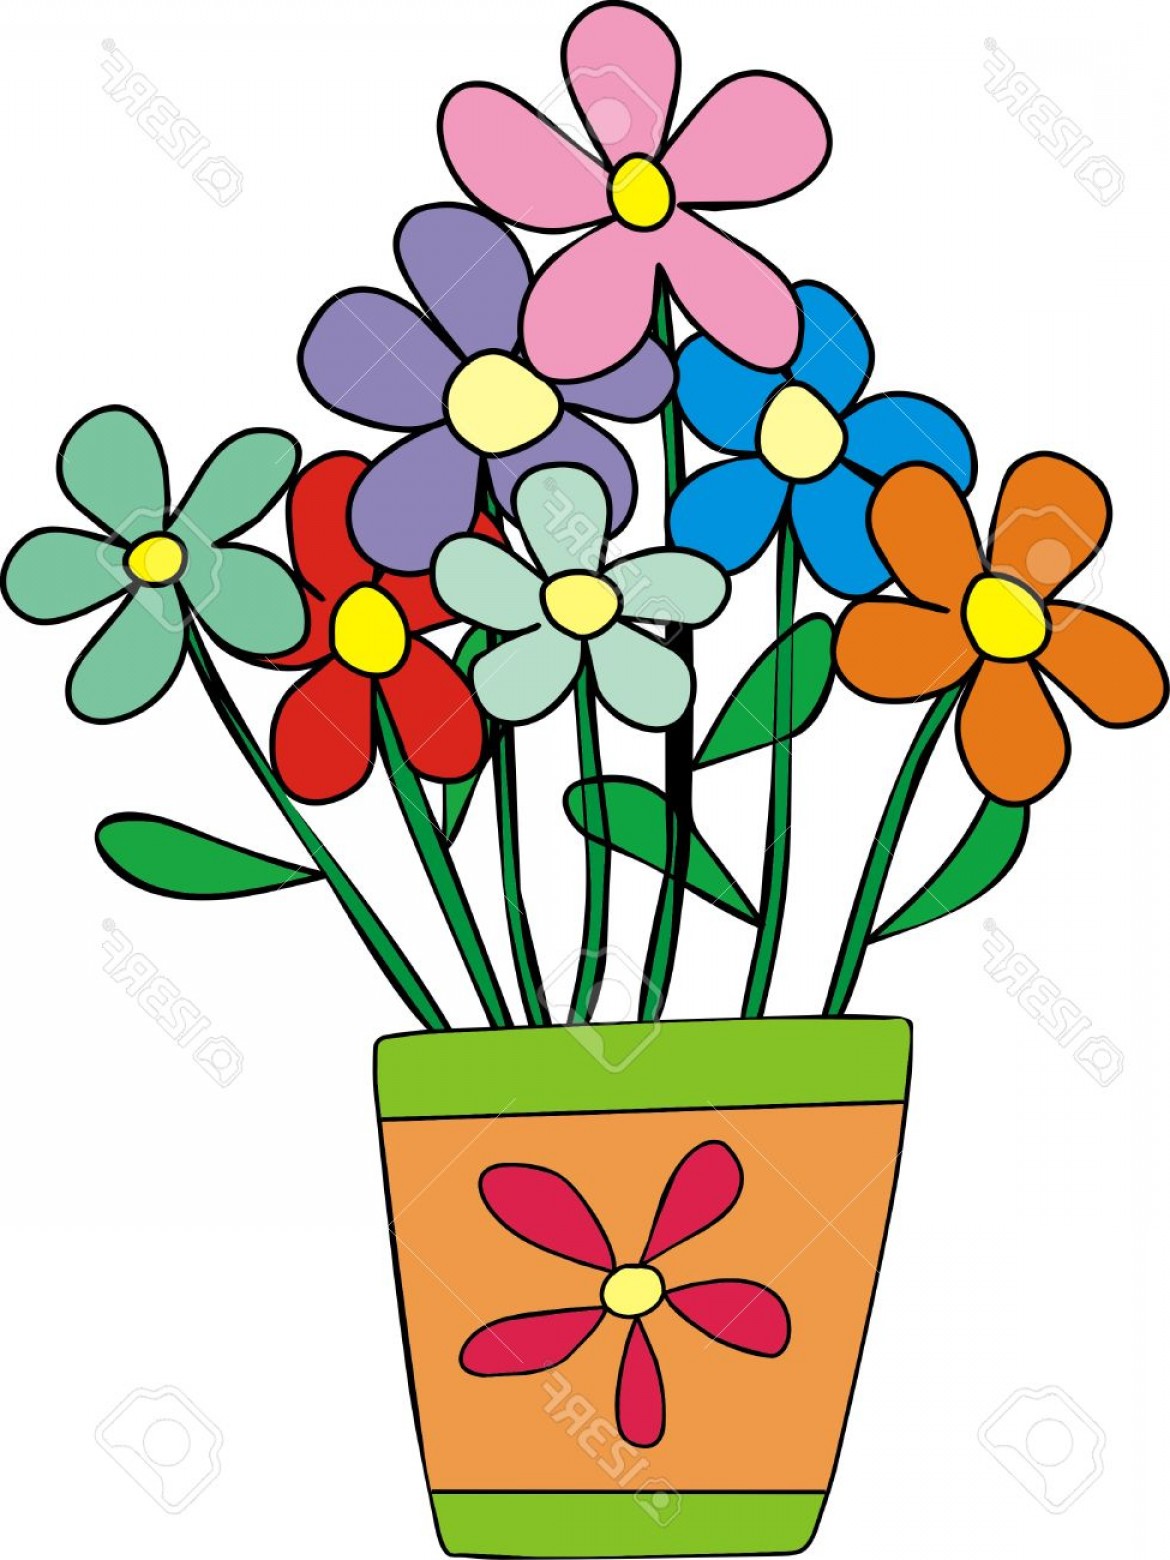 Free Flower Pot Clipart, Download Free Flower Pot Clipart png images ...